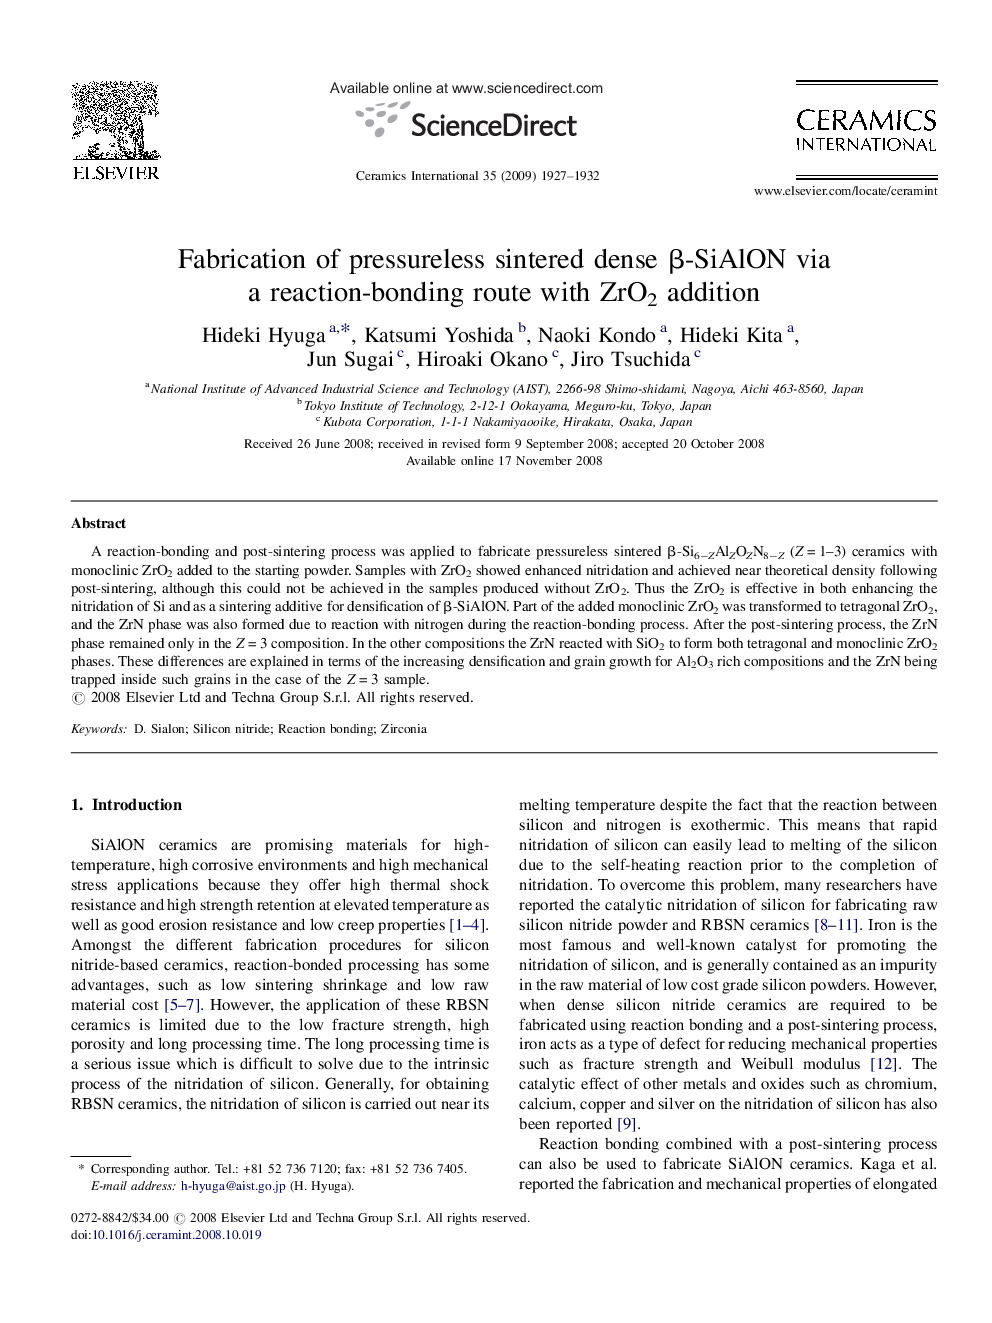 Fabrication of pressureless sintered dense β-SiAlON via a reaction-bonding route with ZrO2 addition